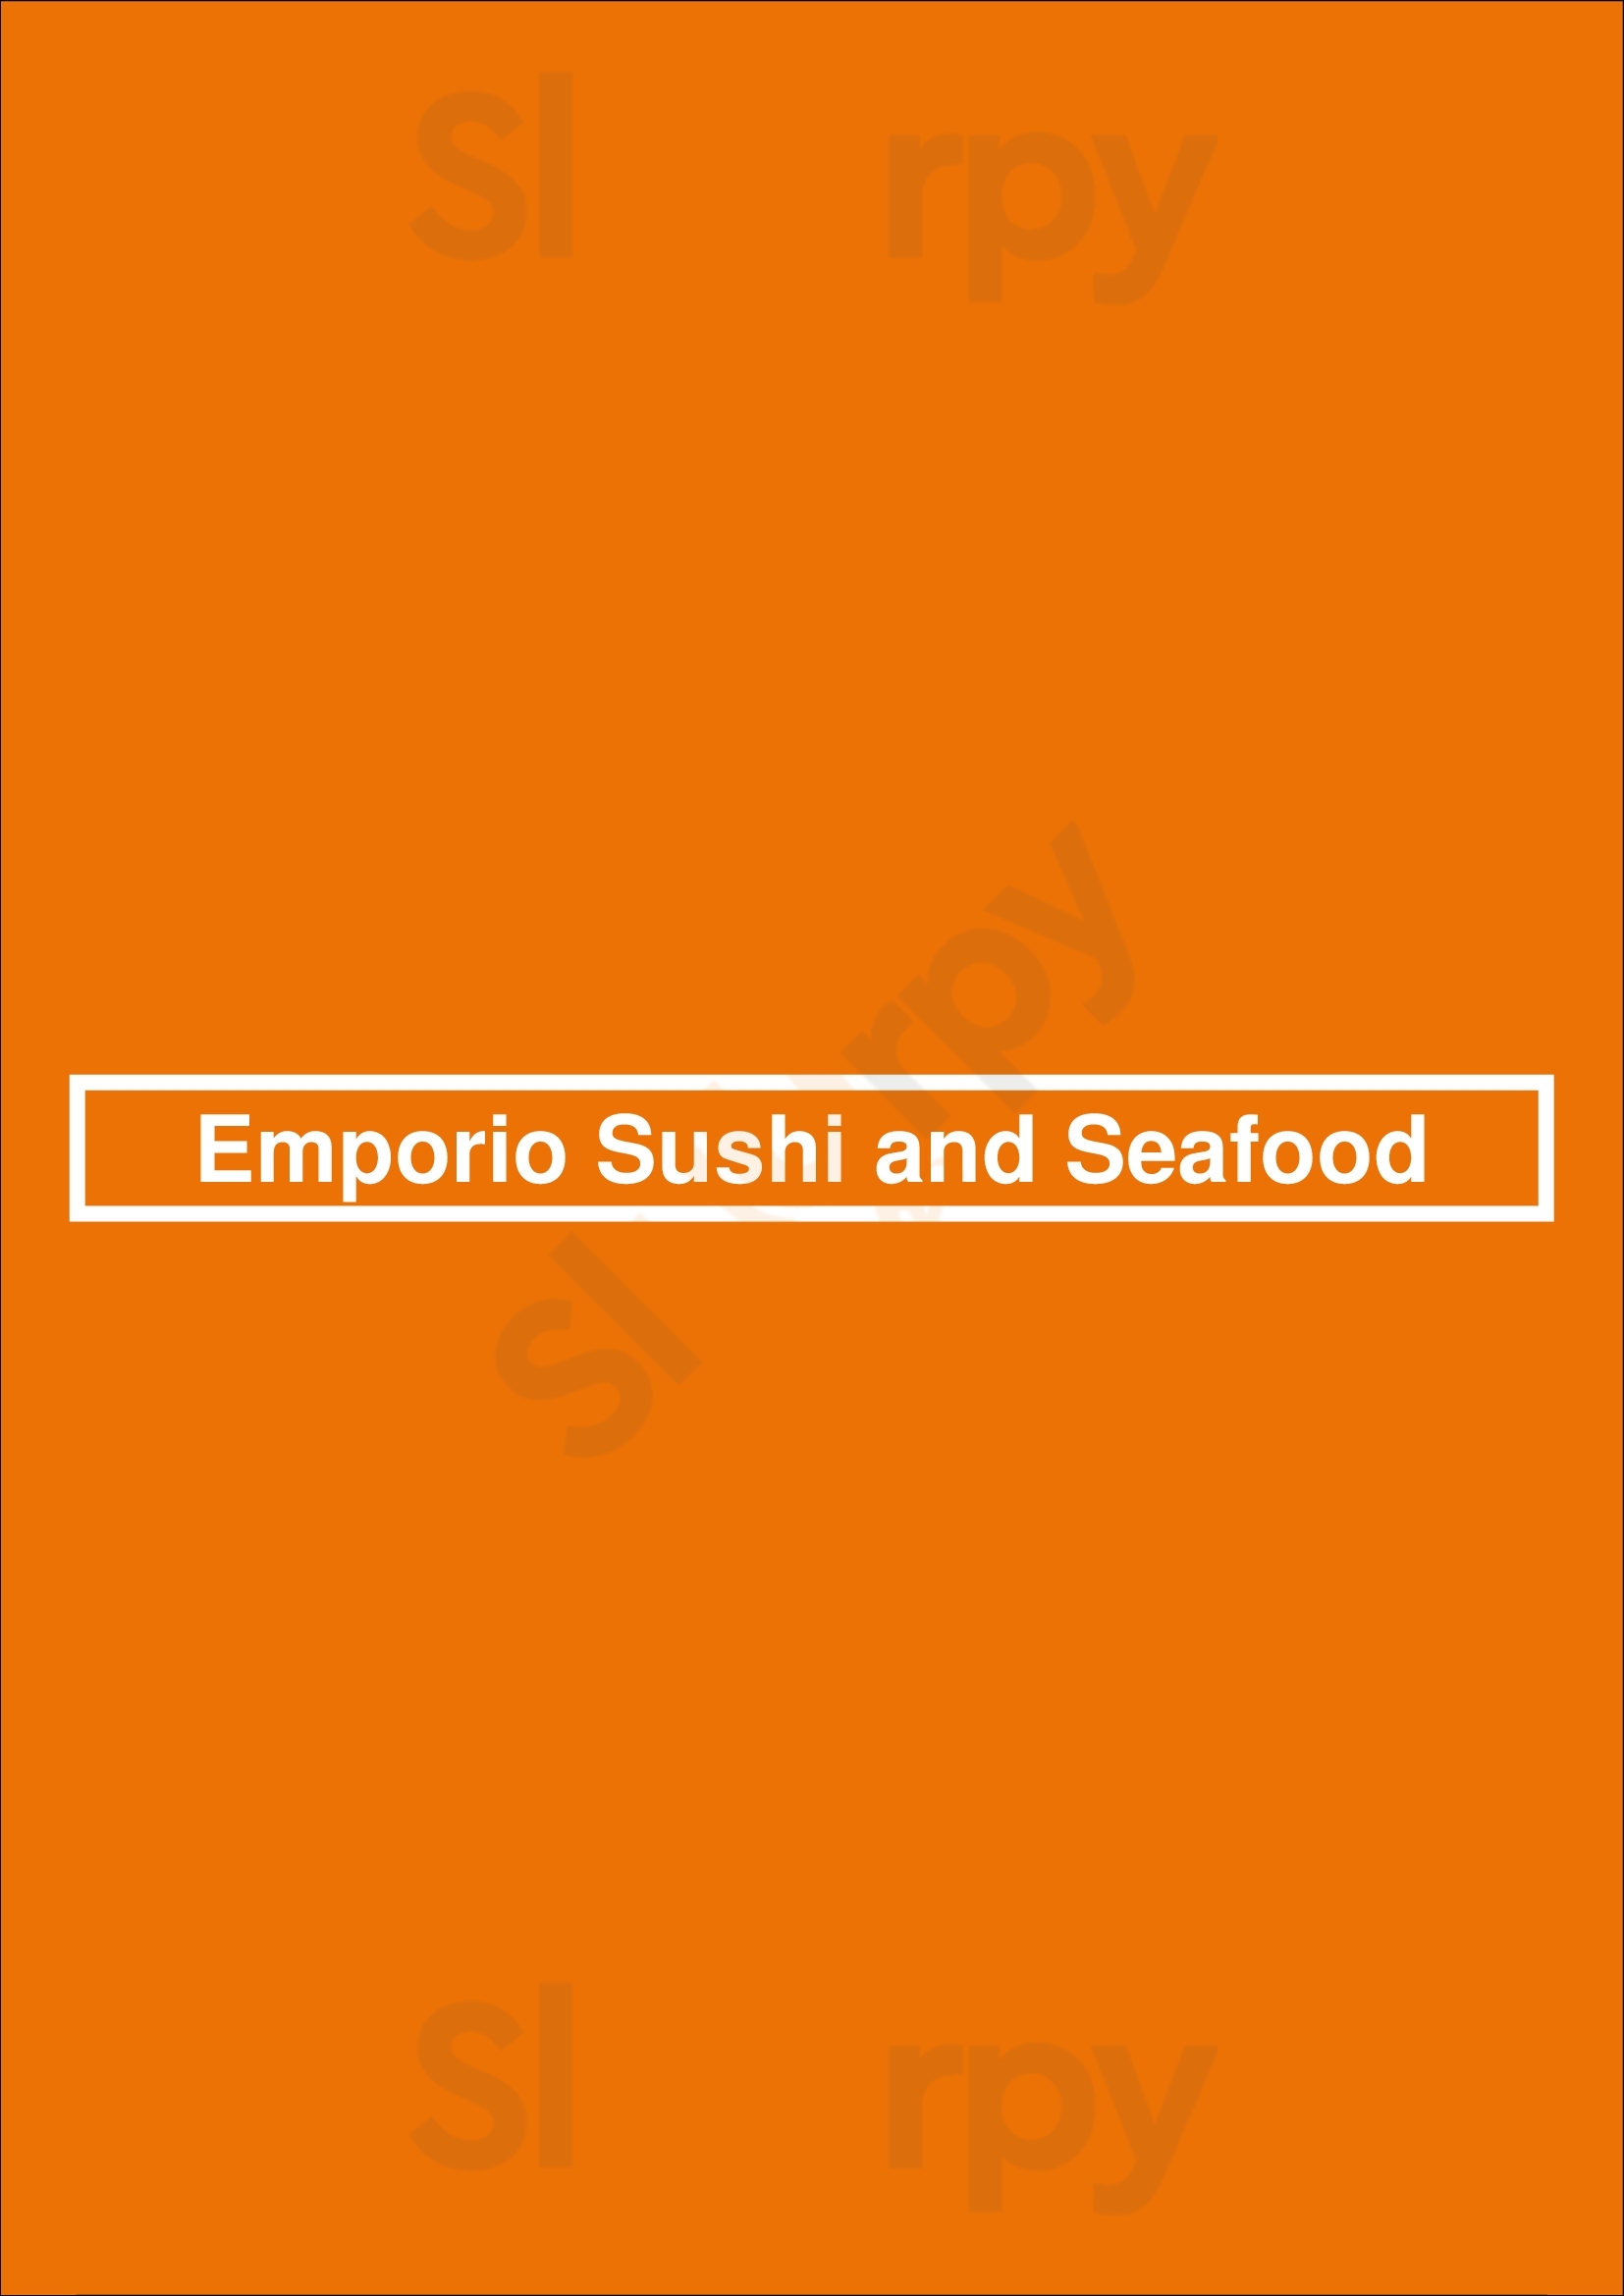 Emporio Sushi And Seafood Orange Menu - 1